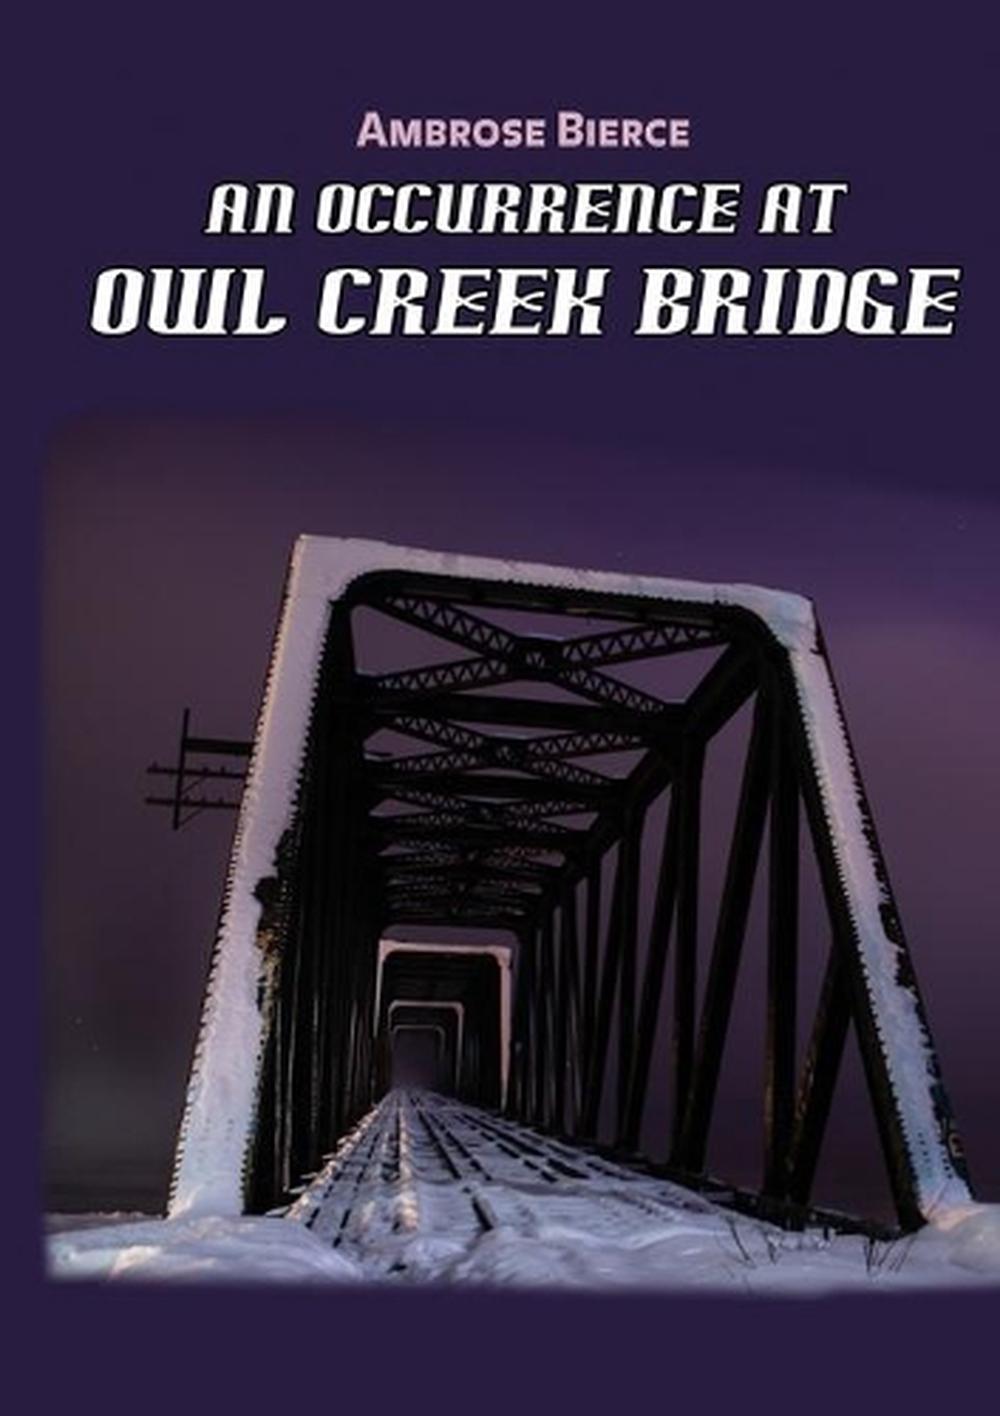 bierce an occurrence at owl creek bridge